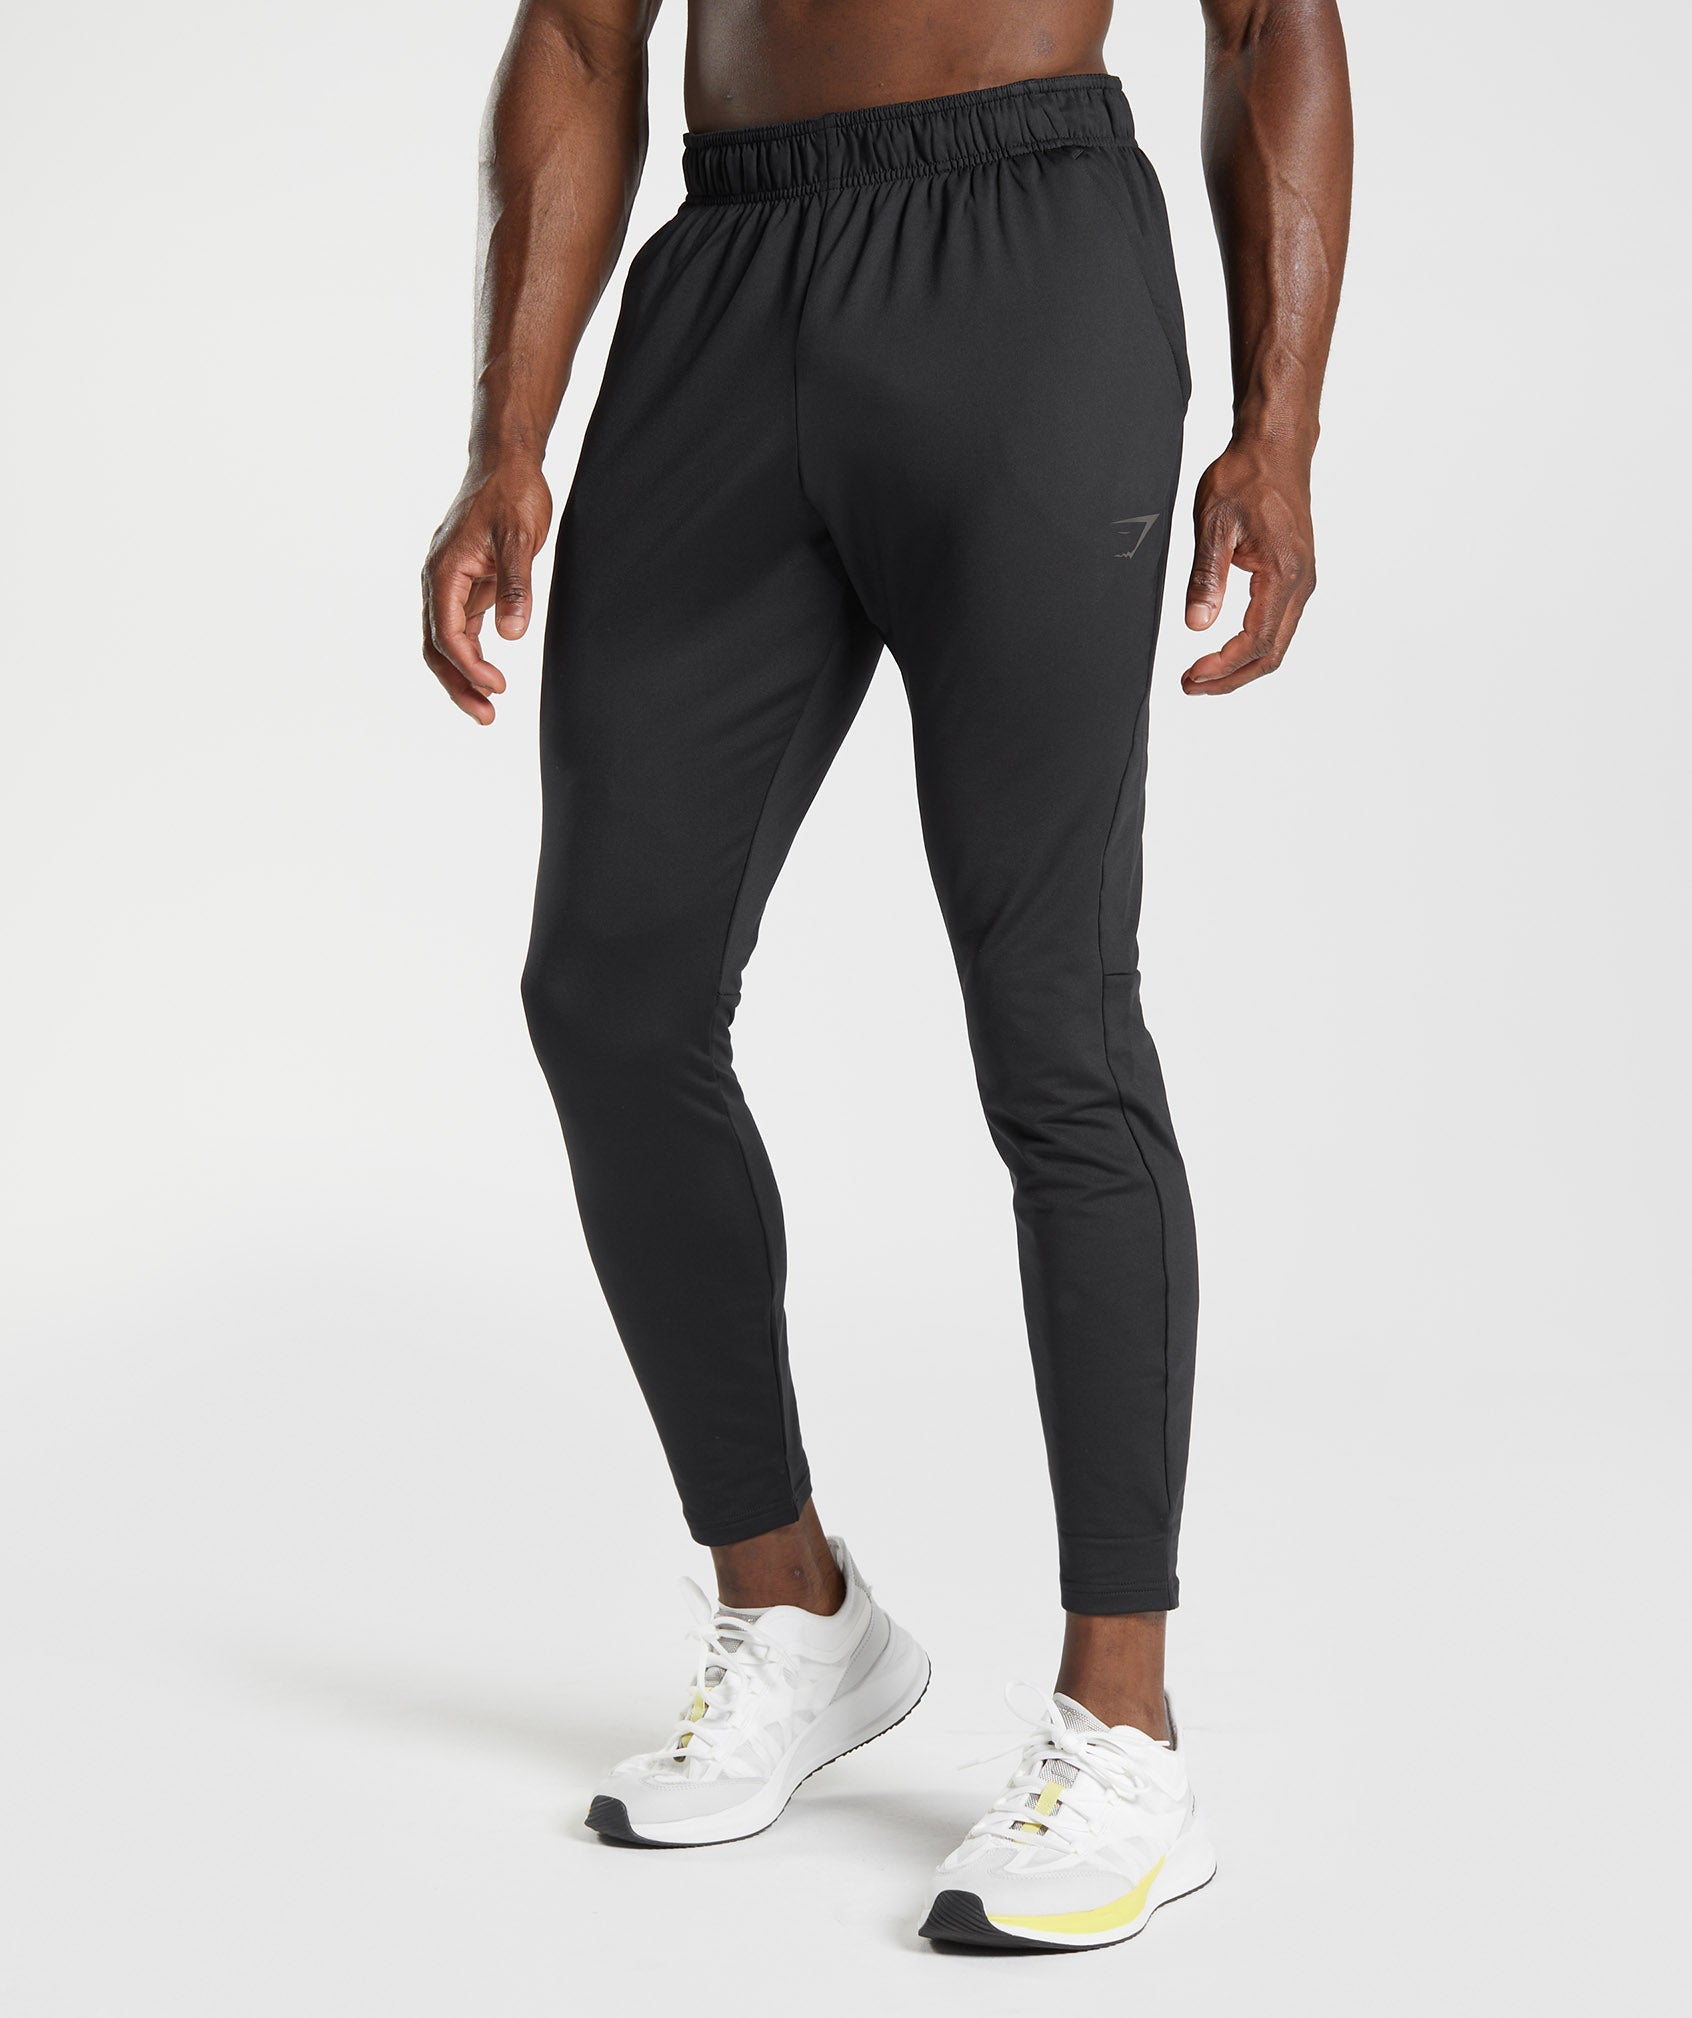 Gymshark Sweatpant Womens Small Black Gray Ankle Crop Jogger Sweatpants 